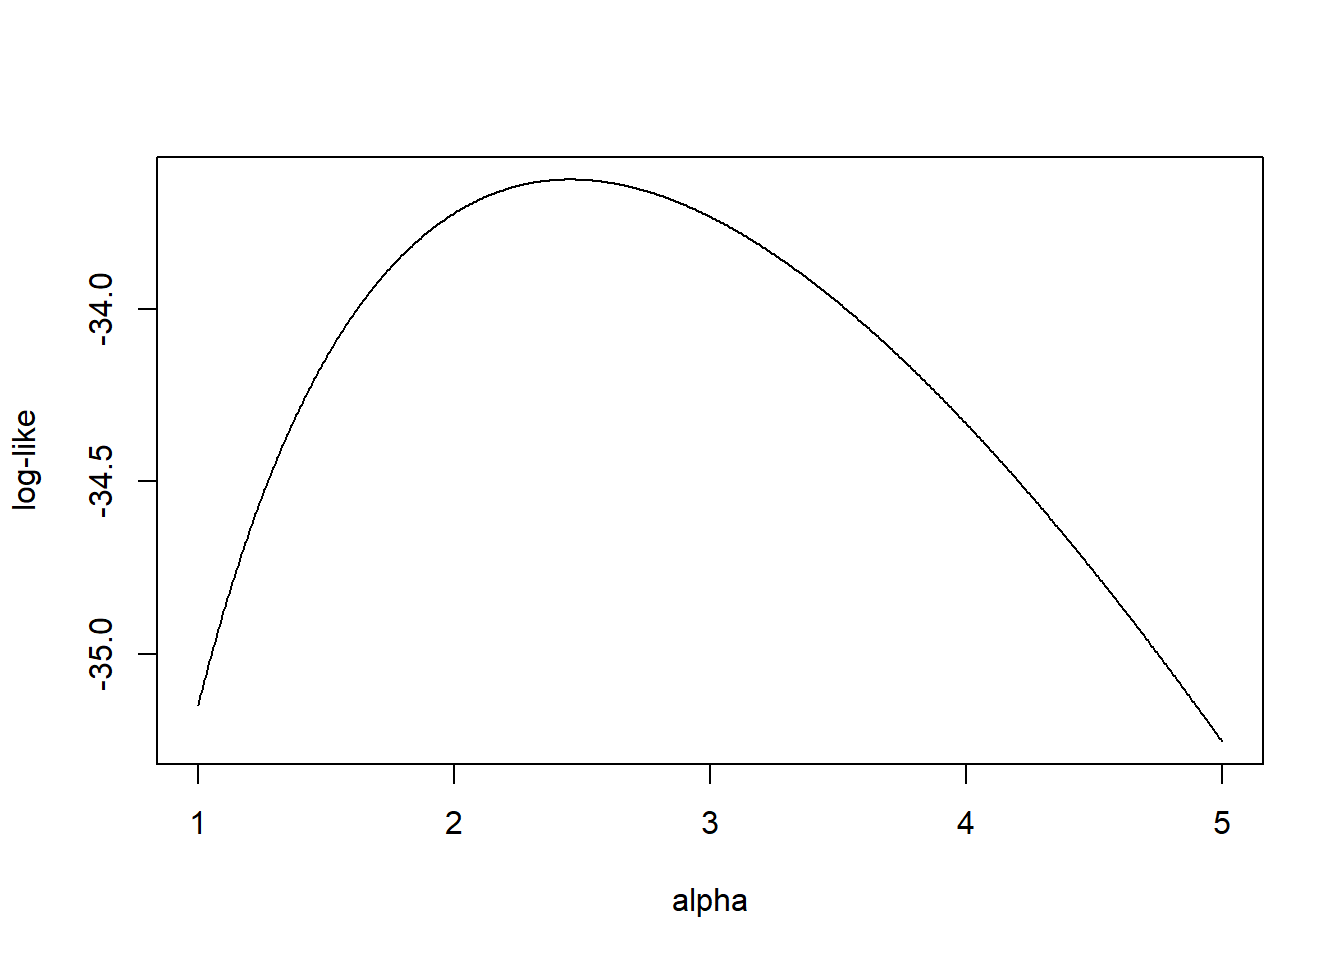 Logarithmic Likelihood for a One-Parameter Pareto